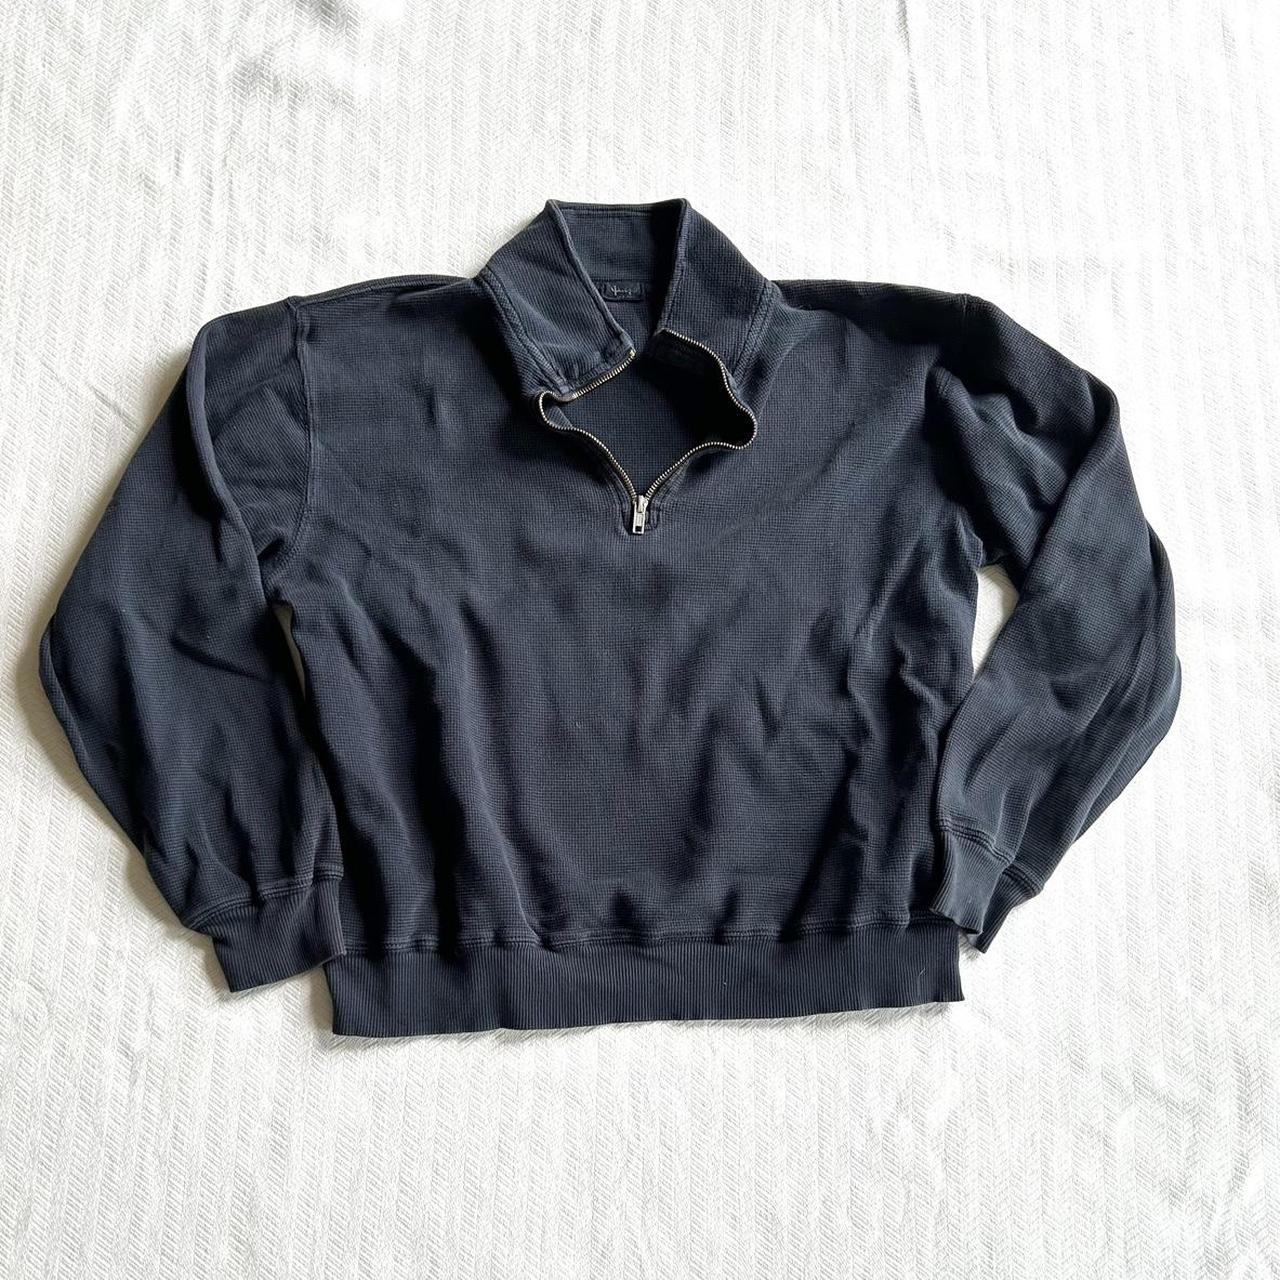 Brandy Melville Black Full-Zip Sweaters